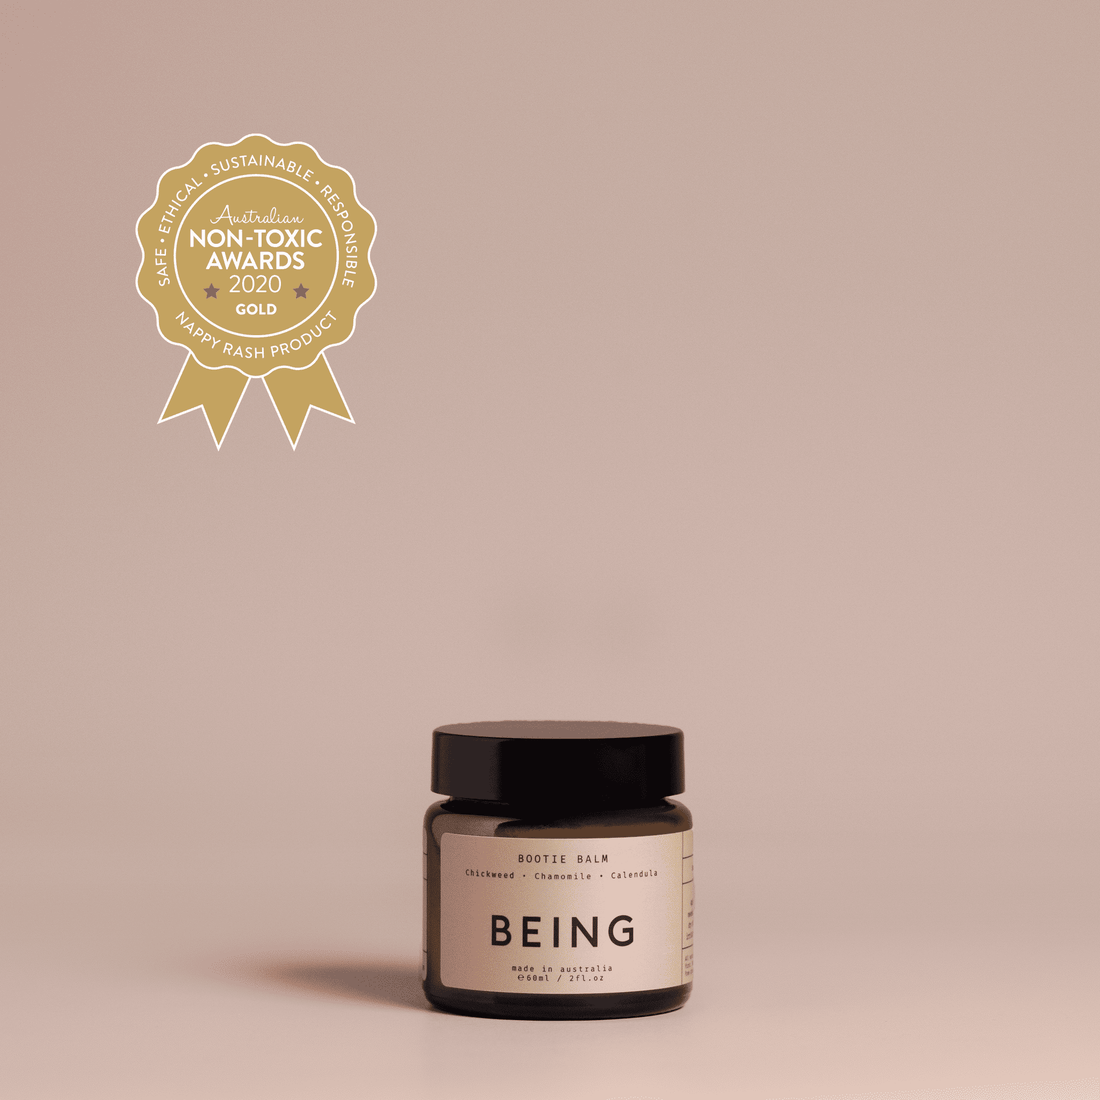 Bootie Balm by BEING Skincare (50g) - Award Winning Australian Made Natural Nappy Rash Cream